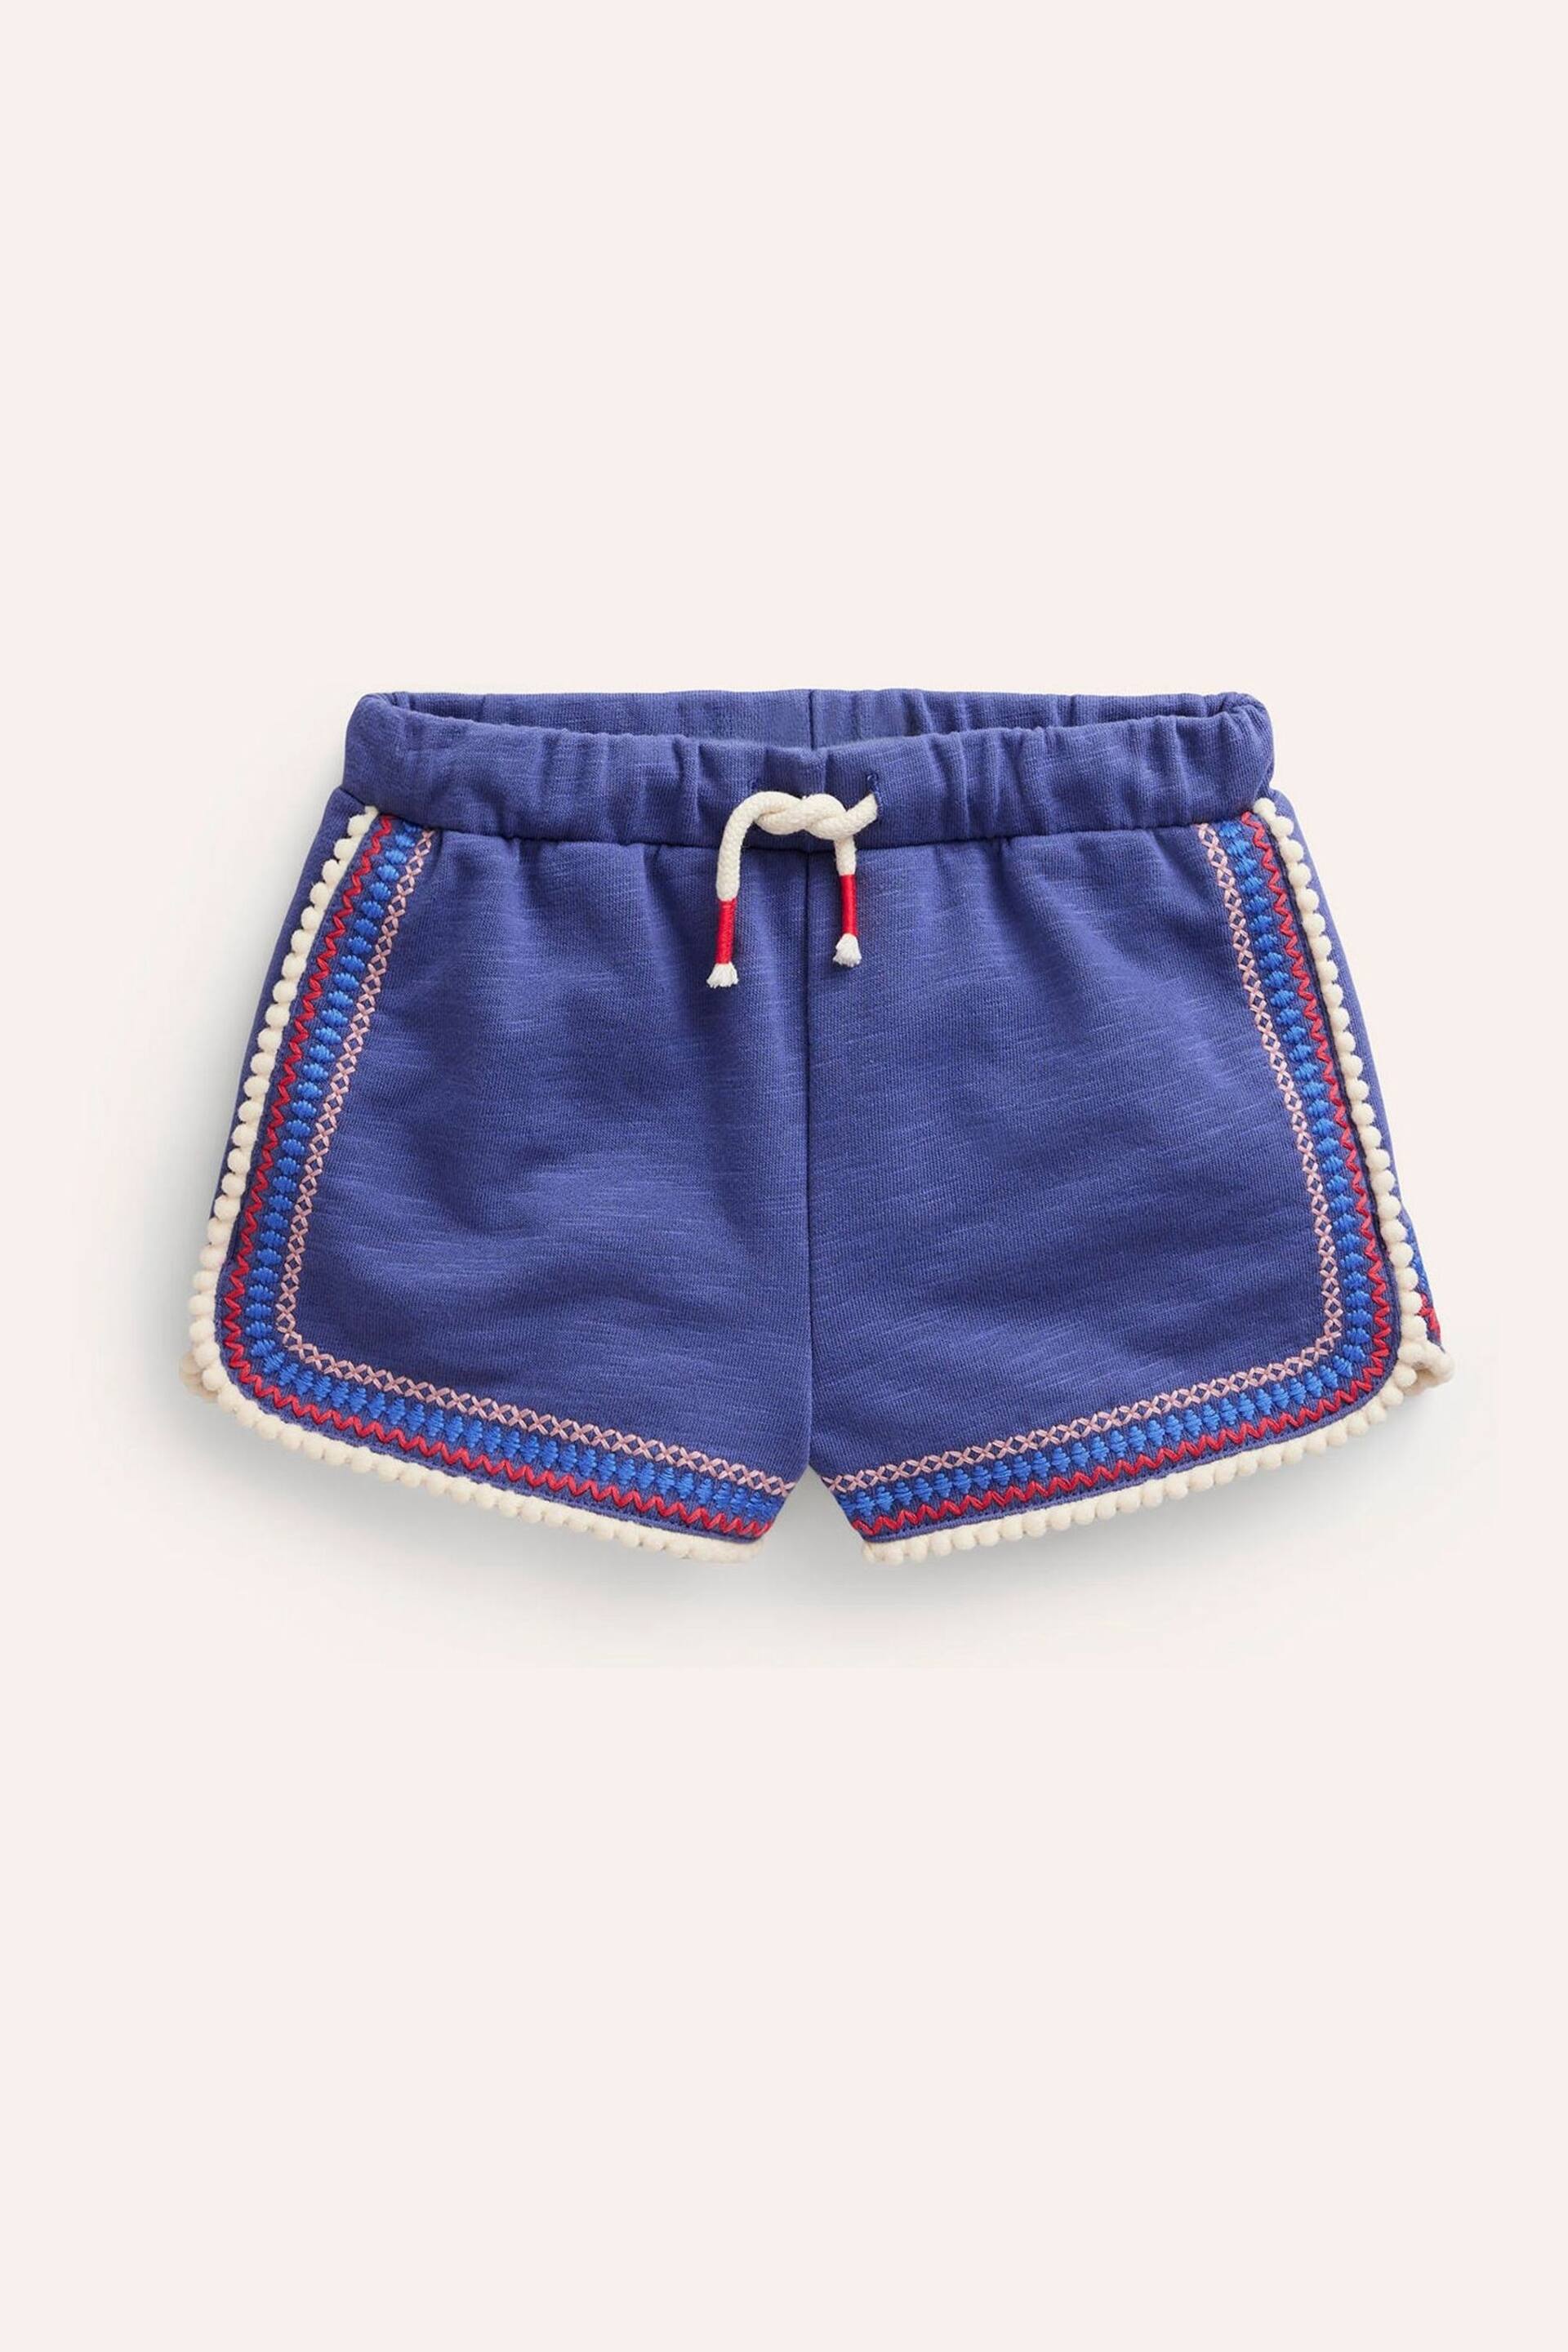 Boden Blue Pom Trim Jersey Shorts - Image 2 of 4